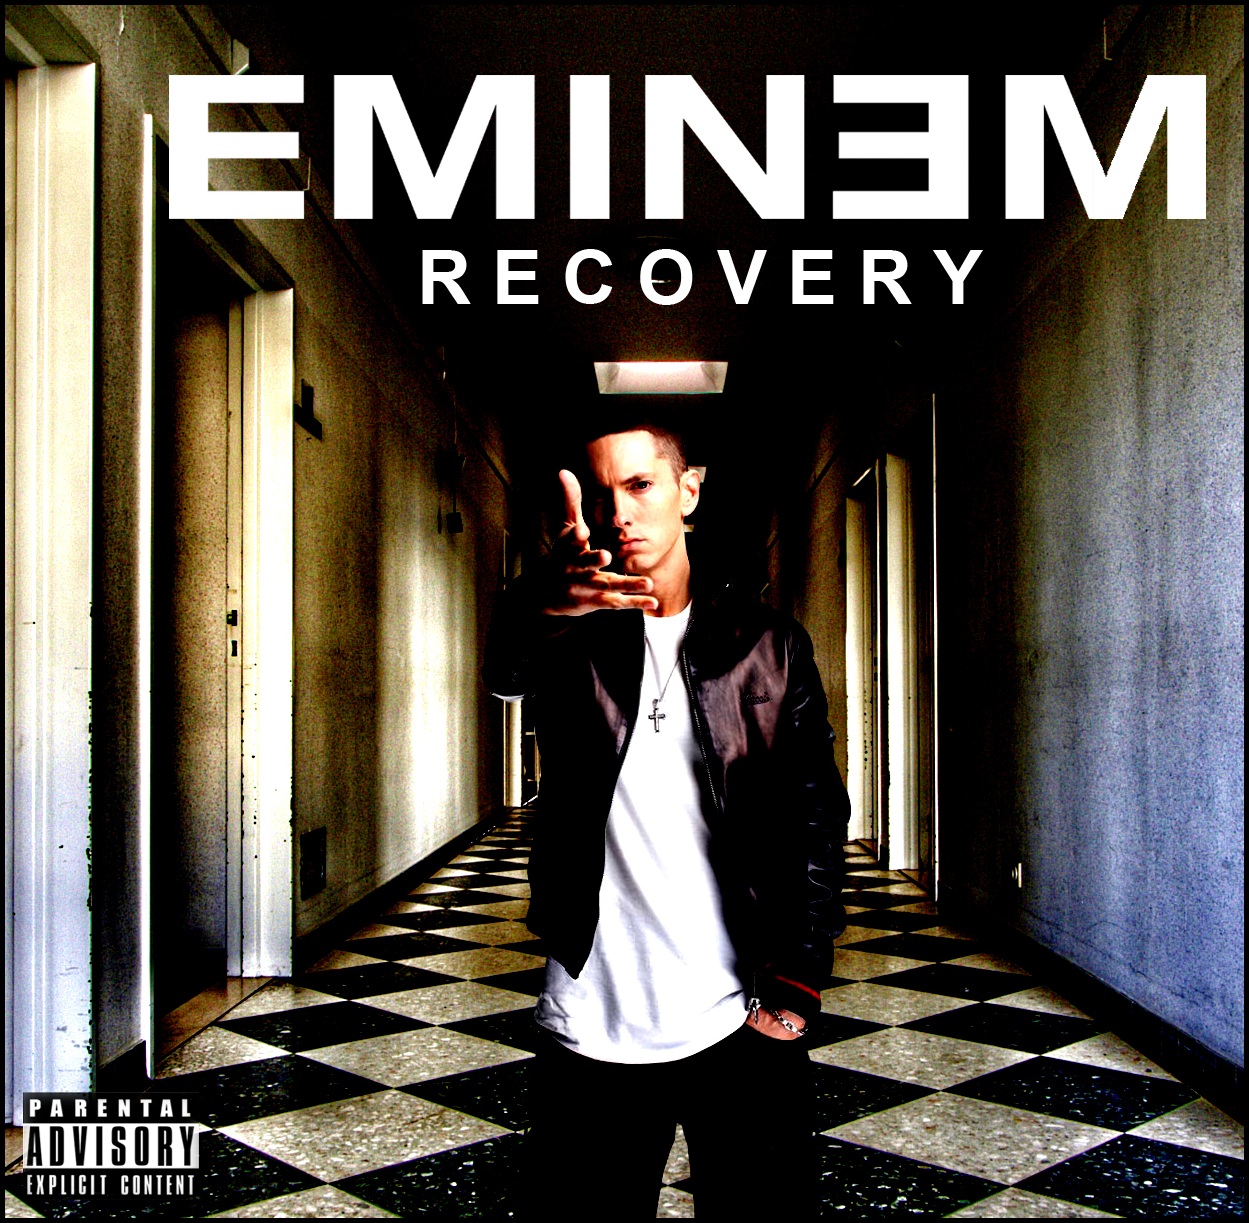 http://3.bp.blogspot.com/-OUlNocIOTco/TtsSttil-5I/AAAAAAAAFSE/Q2-aYPbG9_0/s1600/Eminem+Recovery%252C+Eminem+-+Space+Bound+Lyrics%252C+Mp3+%2526+Video+Song+Download+Free+-+Lyricspassion.blogspot.com.jpg